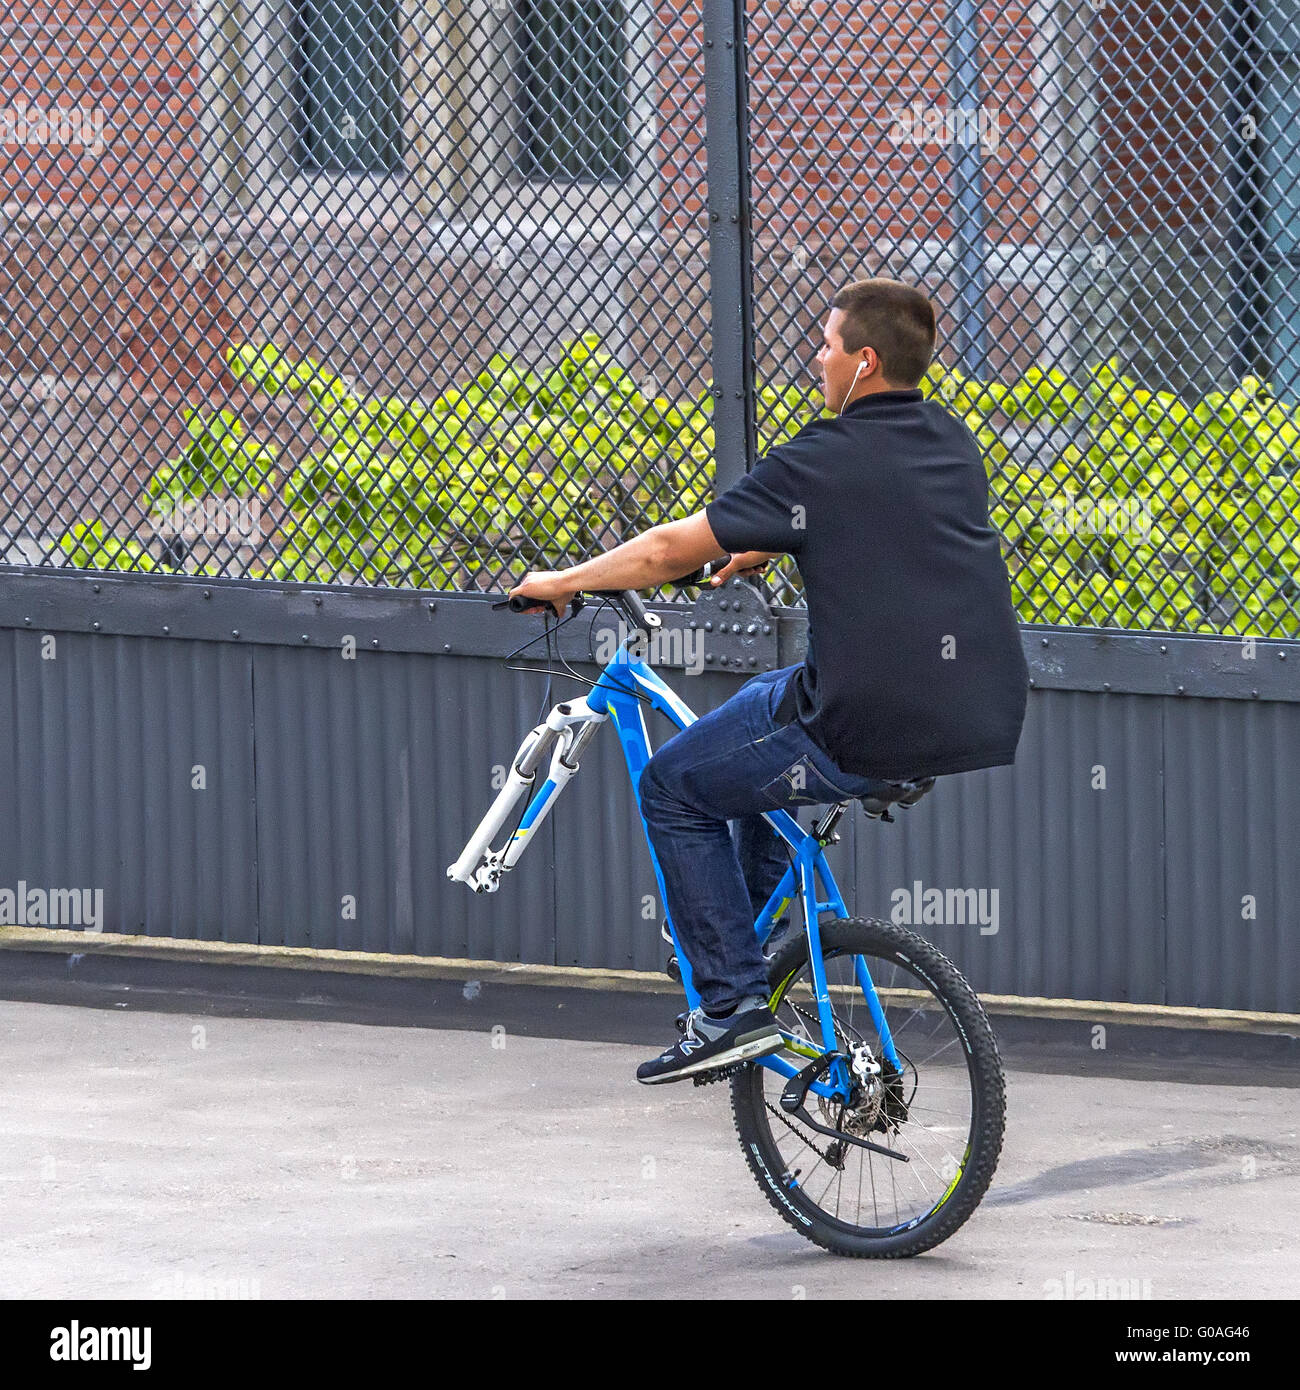 Riding A Bike With One Wheel Copenhagen Denmark Stock Photo